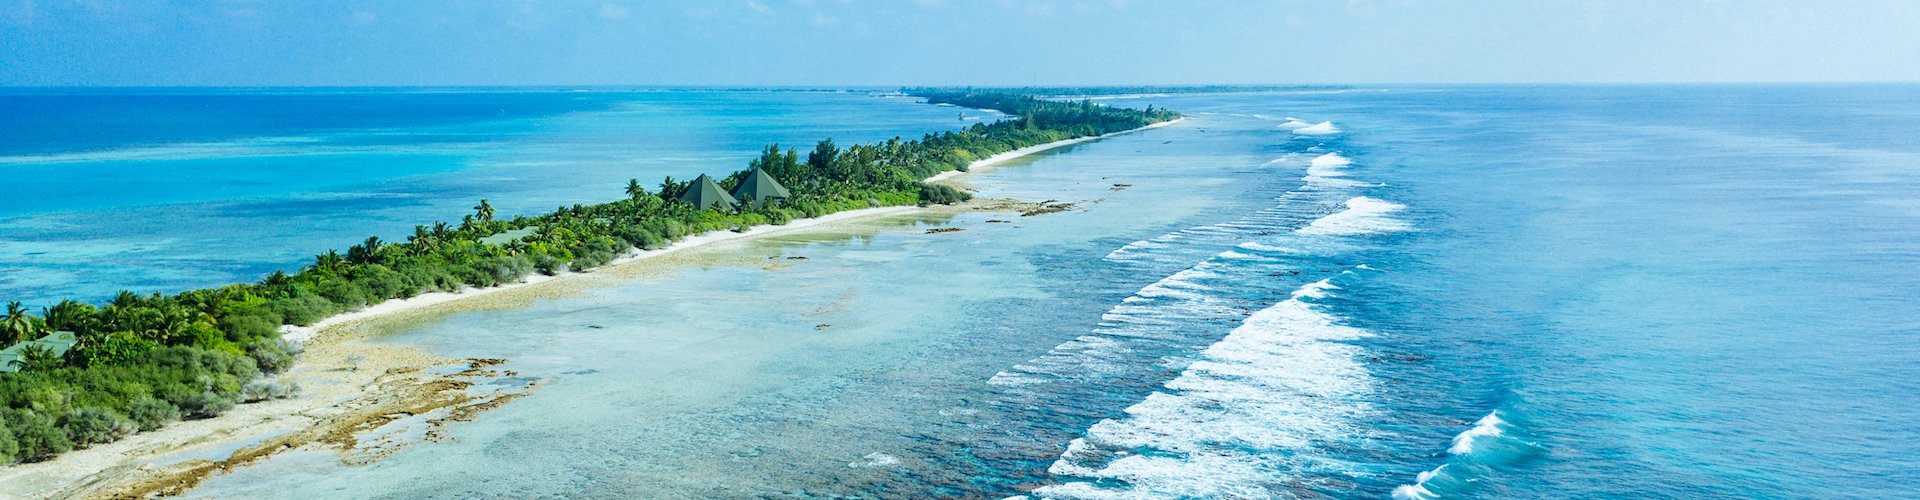 Ausflugsziel Addu-Atoll